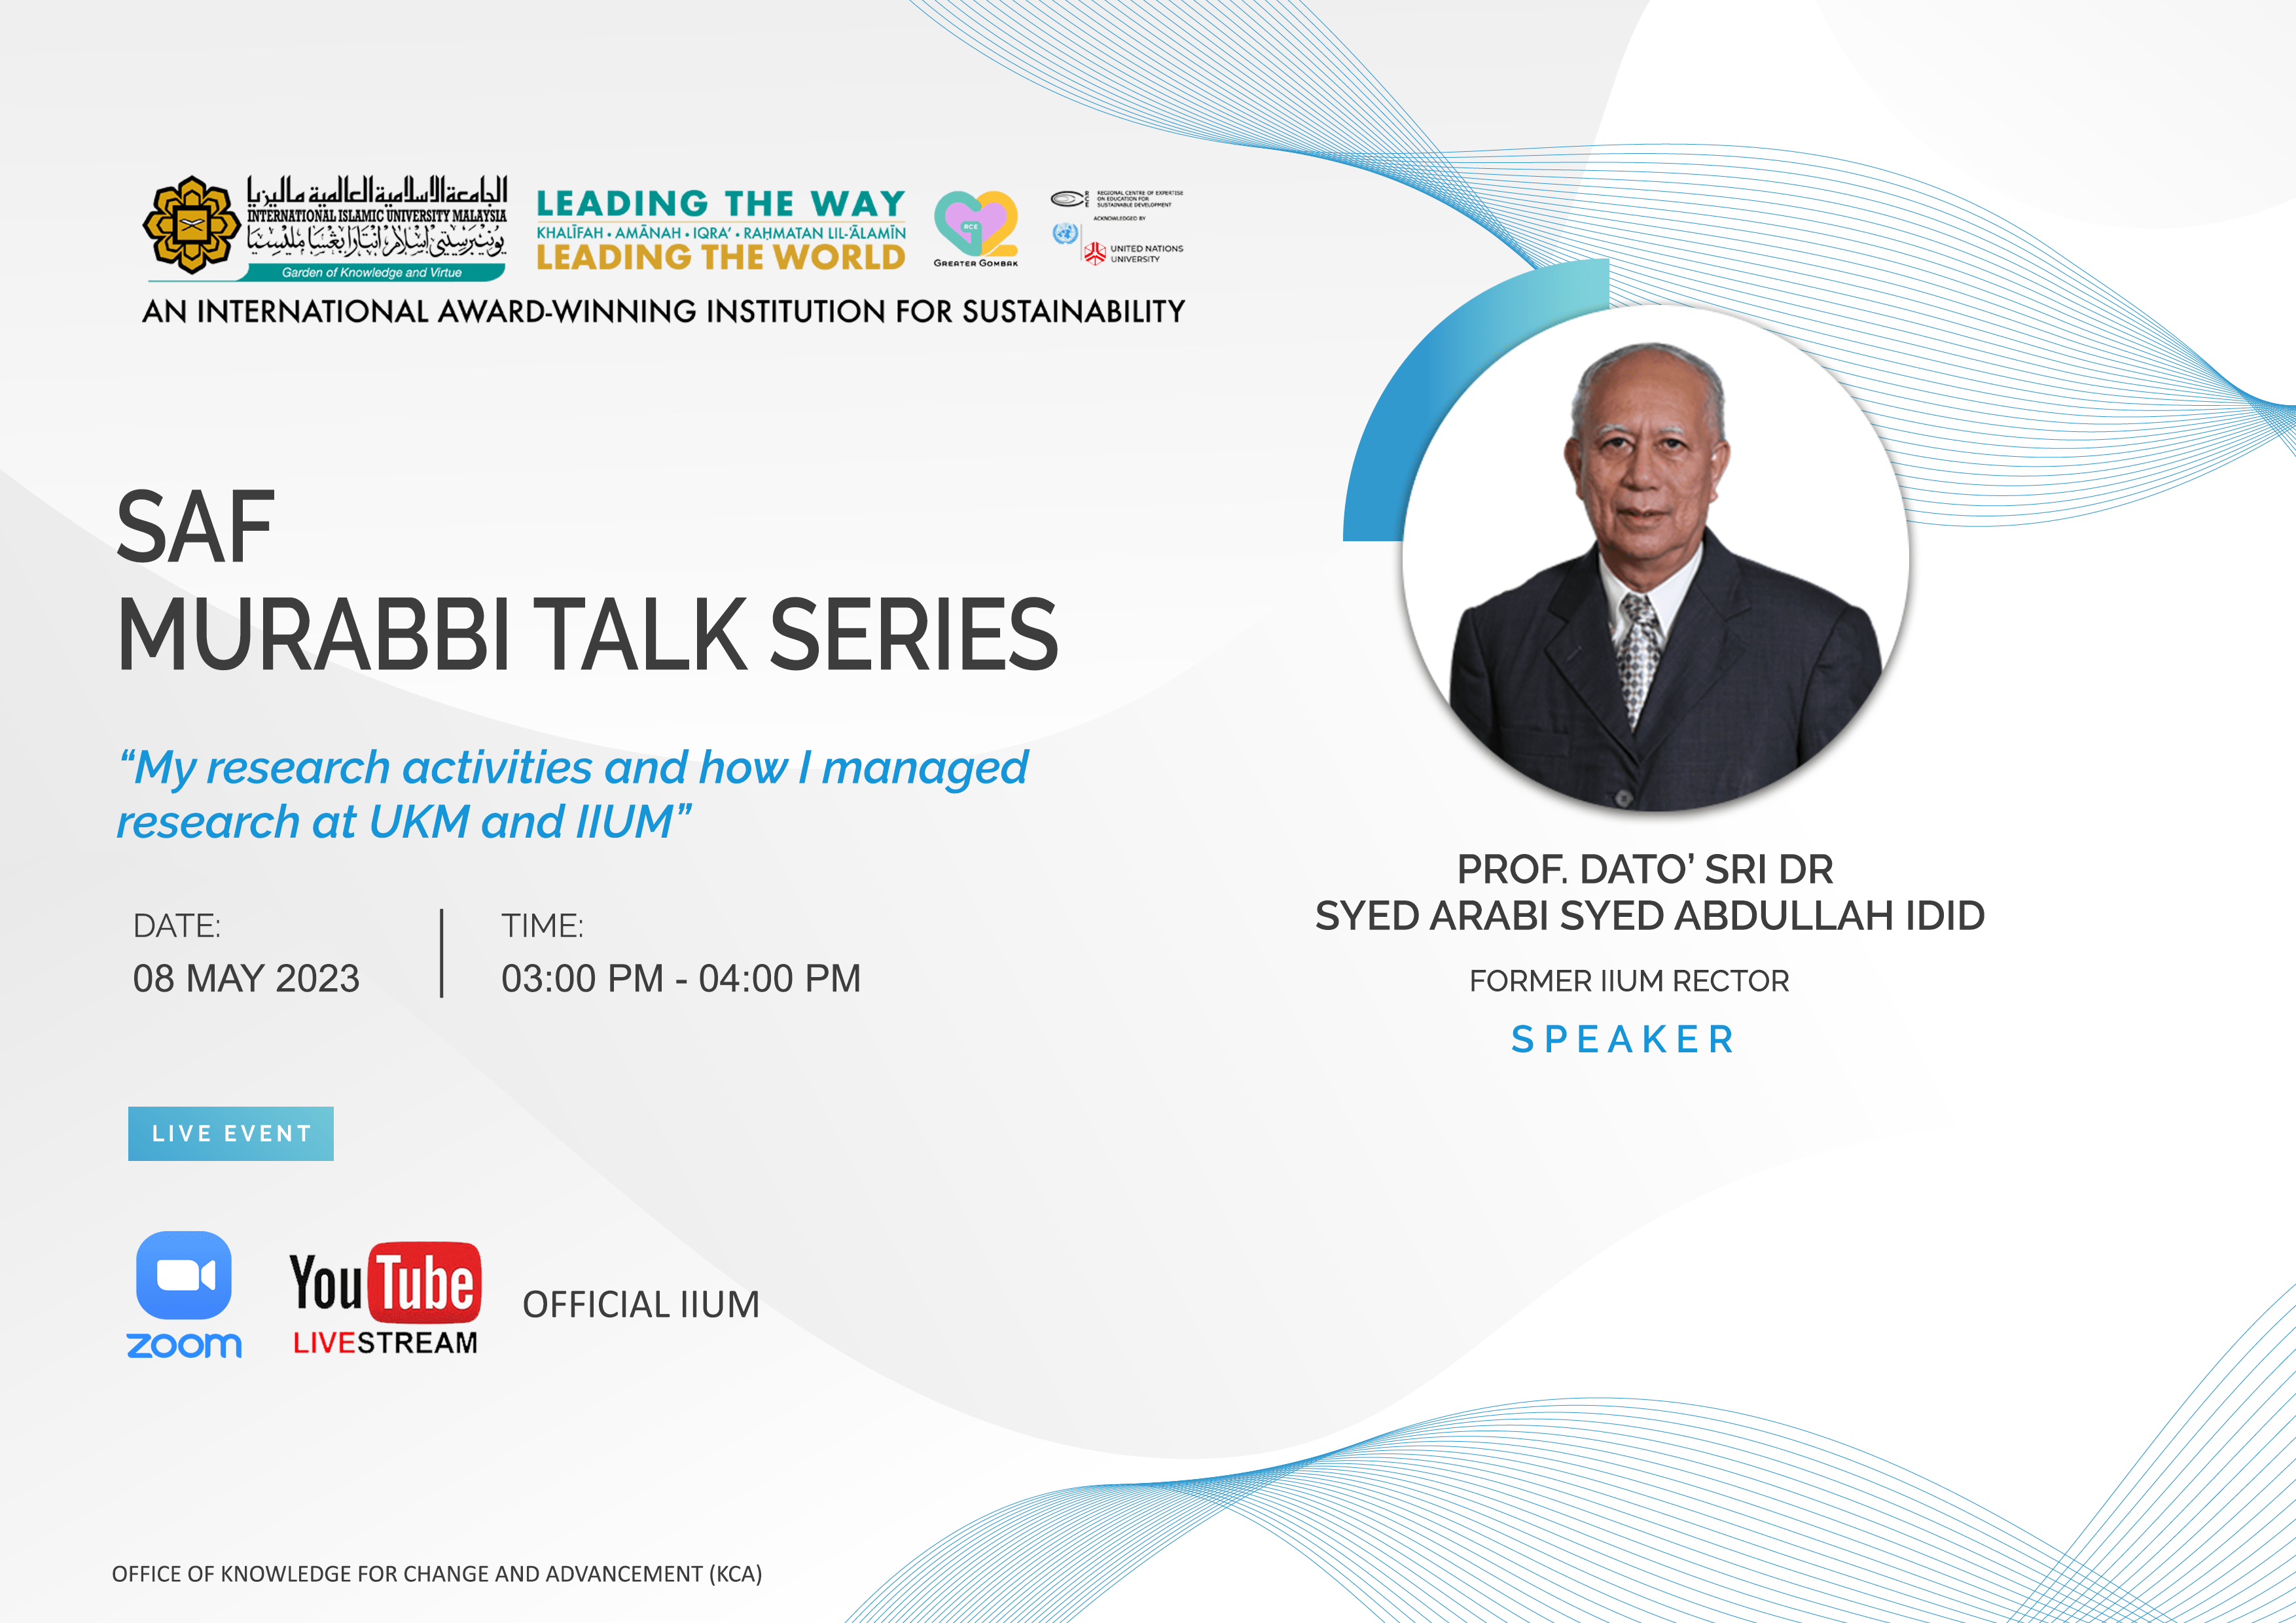 SAF Murabbi Talk Series featuring Prof. Dato’ Sri Dr. Syed Arabi Syed Abdullah Idid